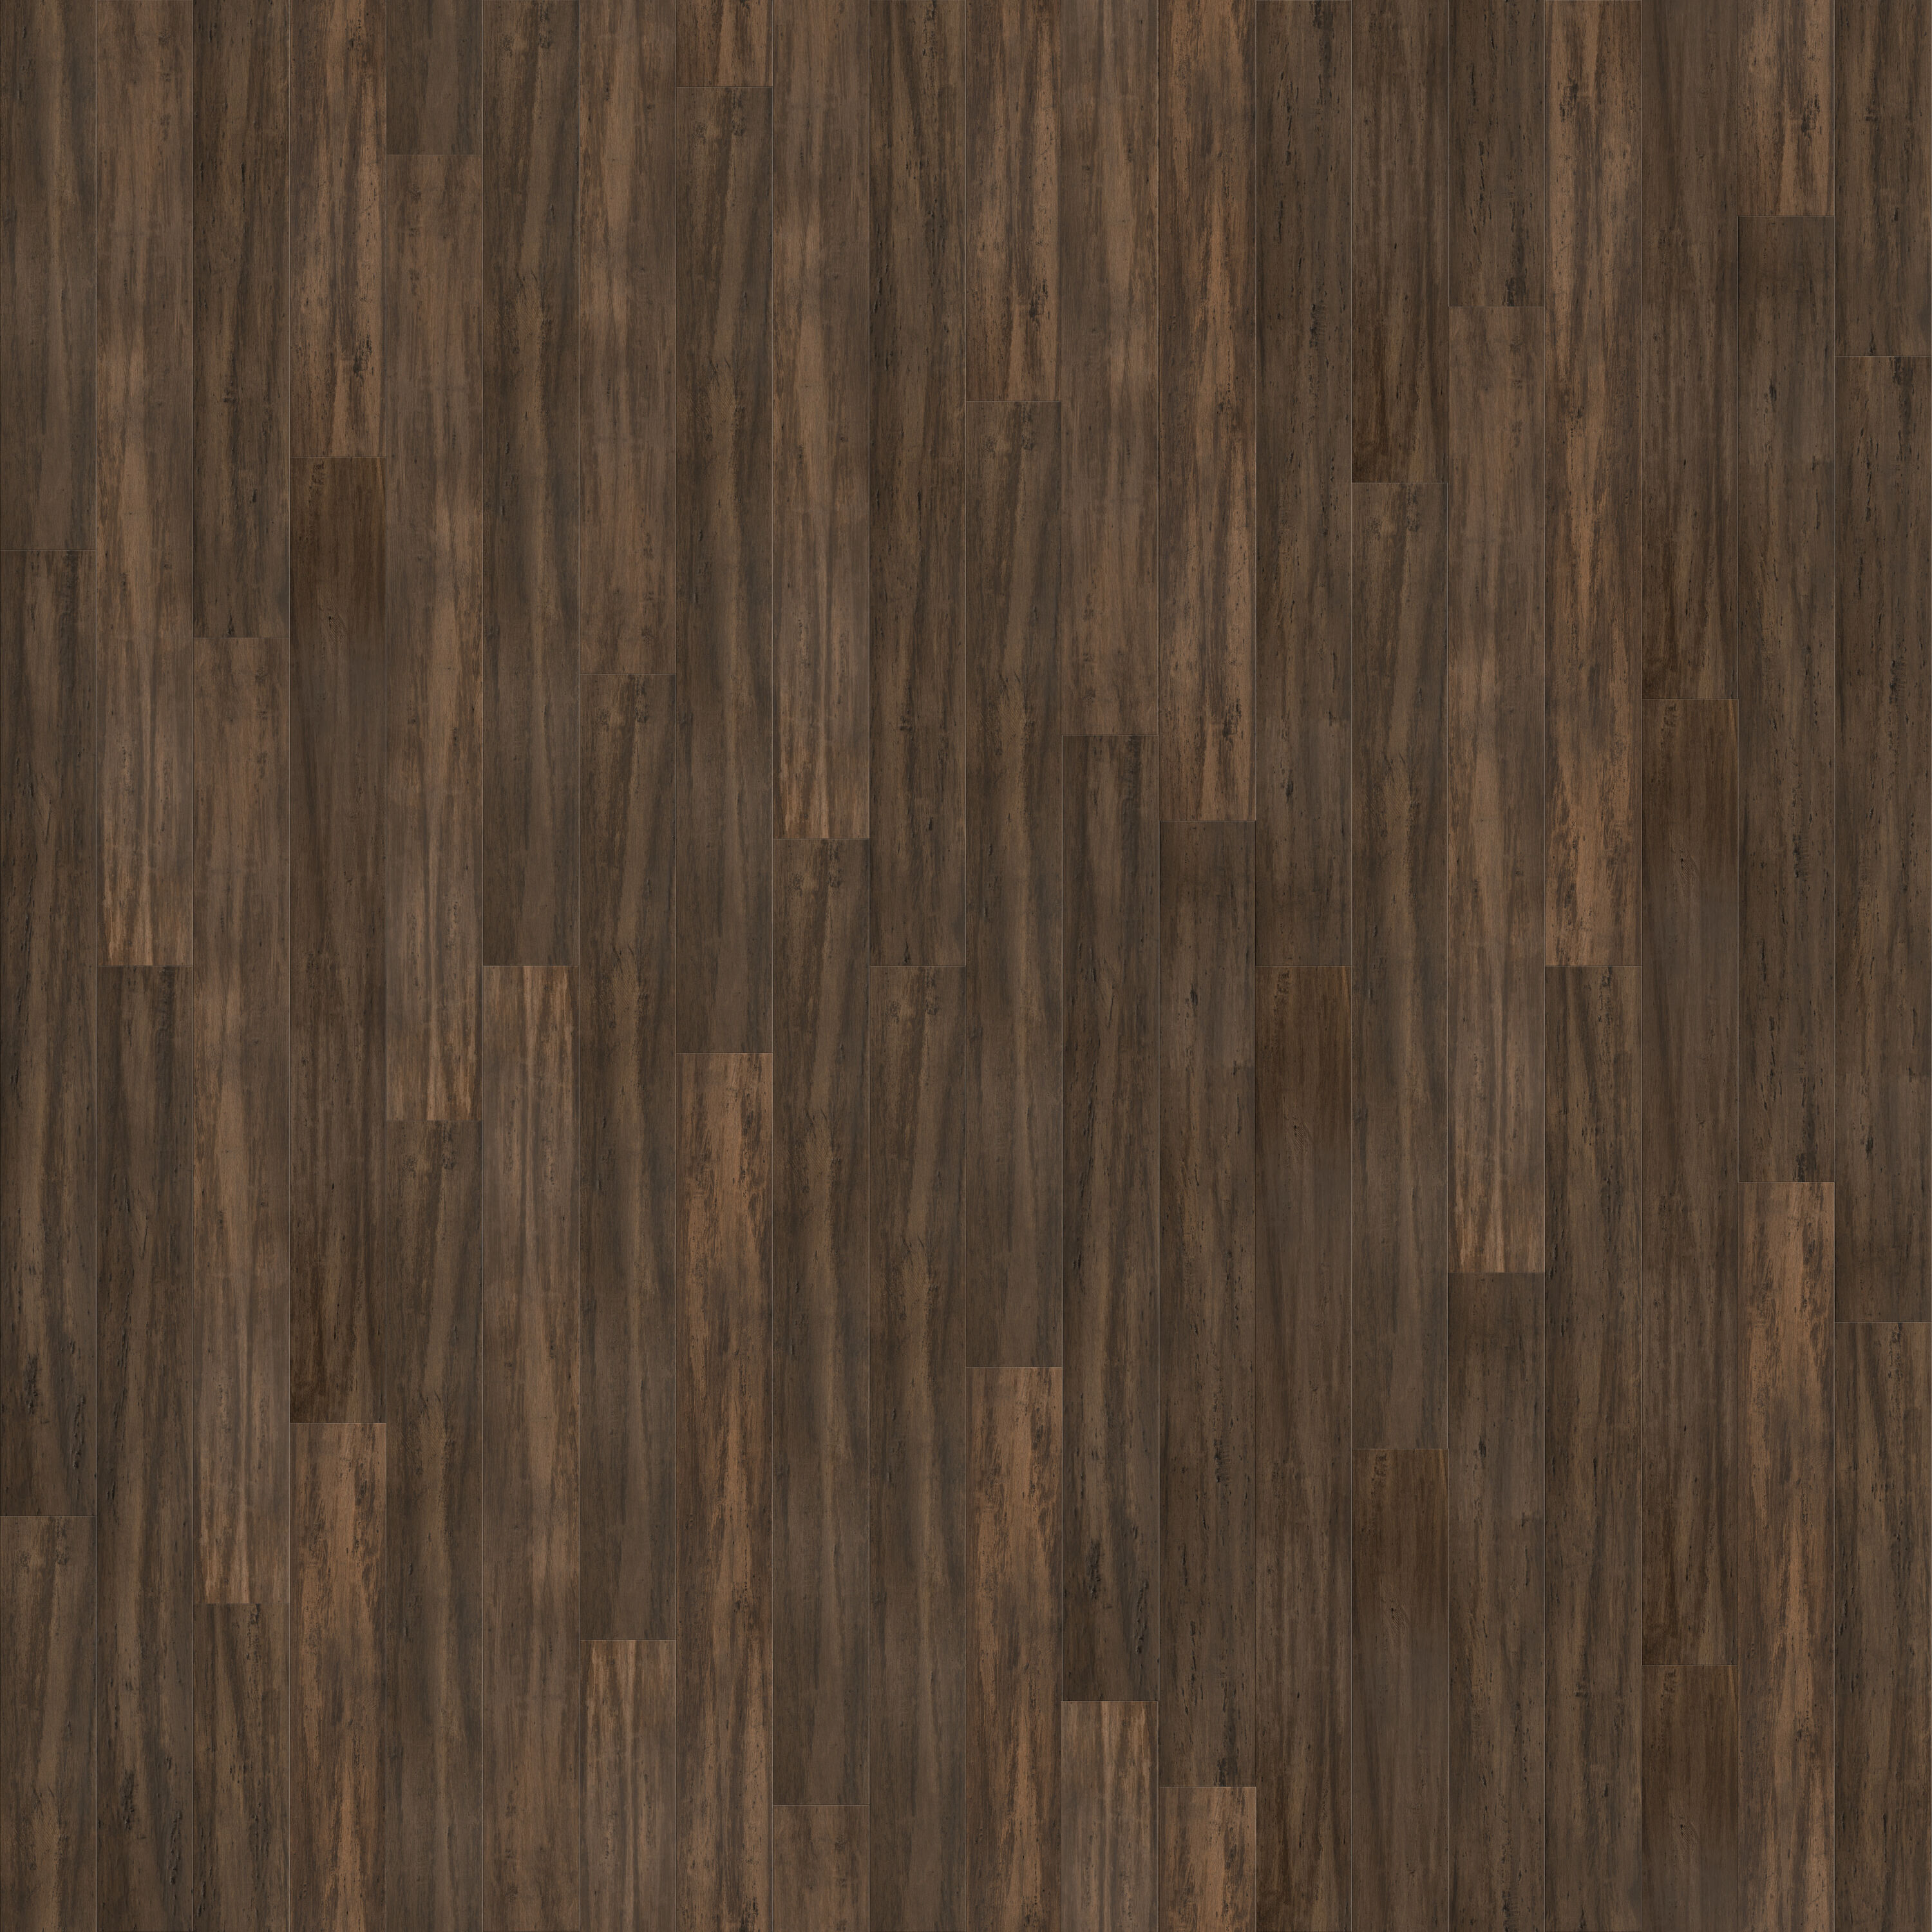 (Sample) Eco-Engineered Treehouse Bamboo Engineered Hardwood Flooring in Brown | - Cali Bamboo 7014005207